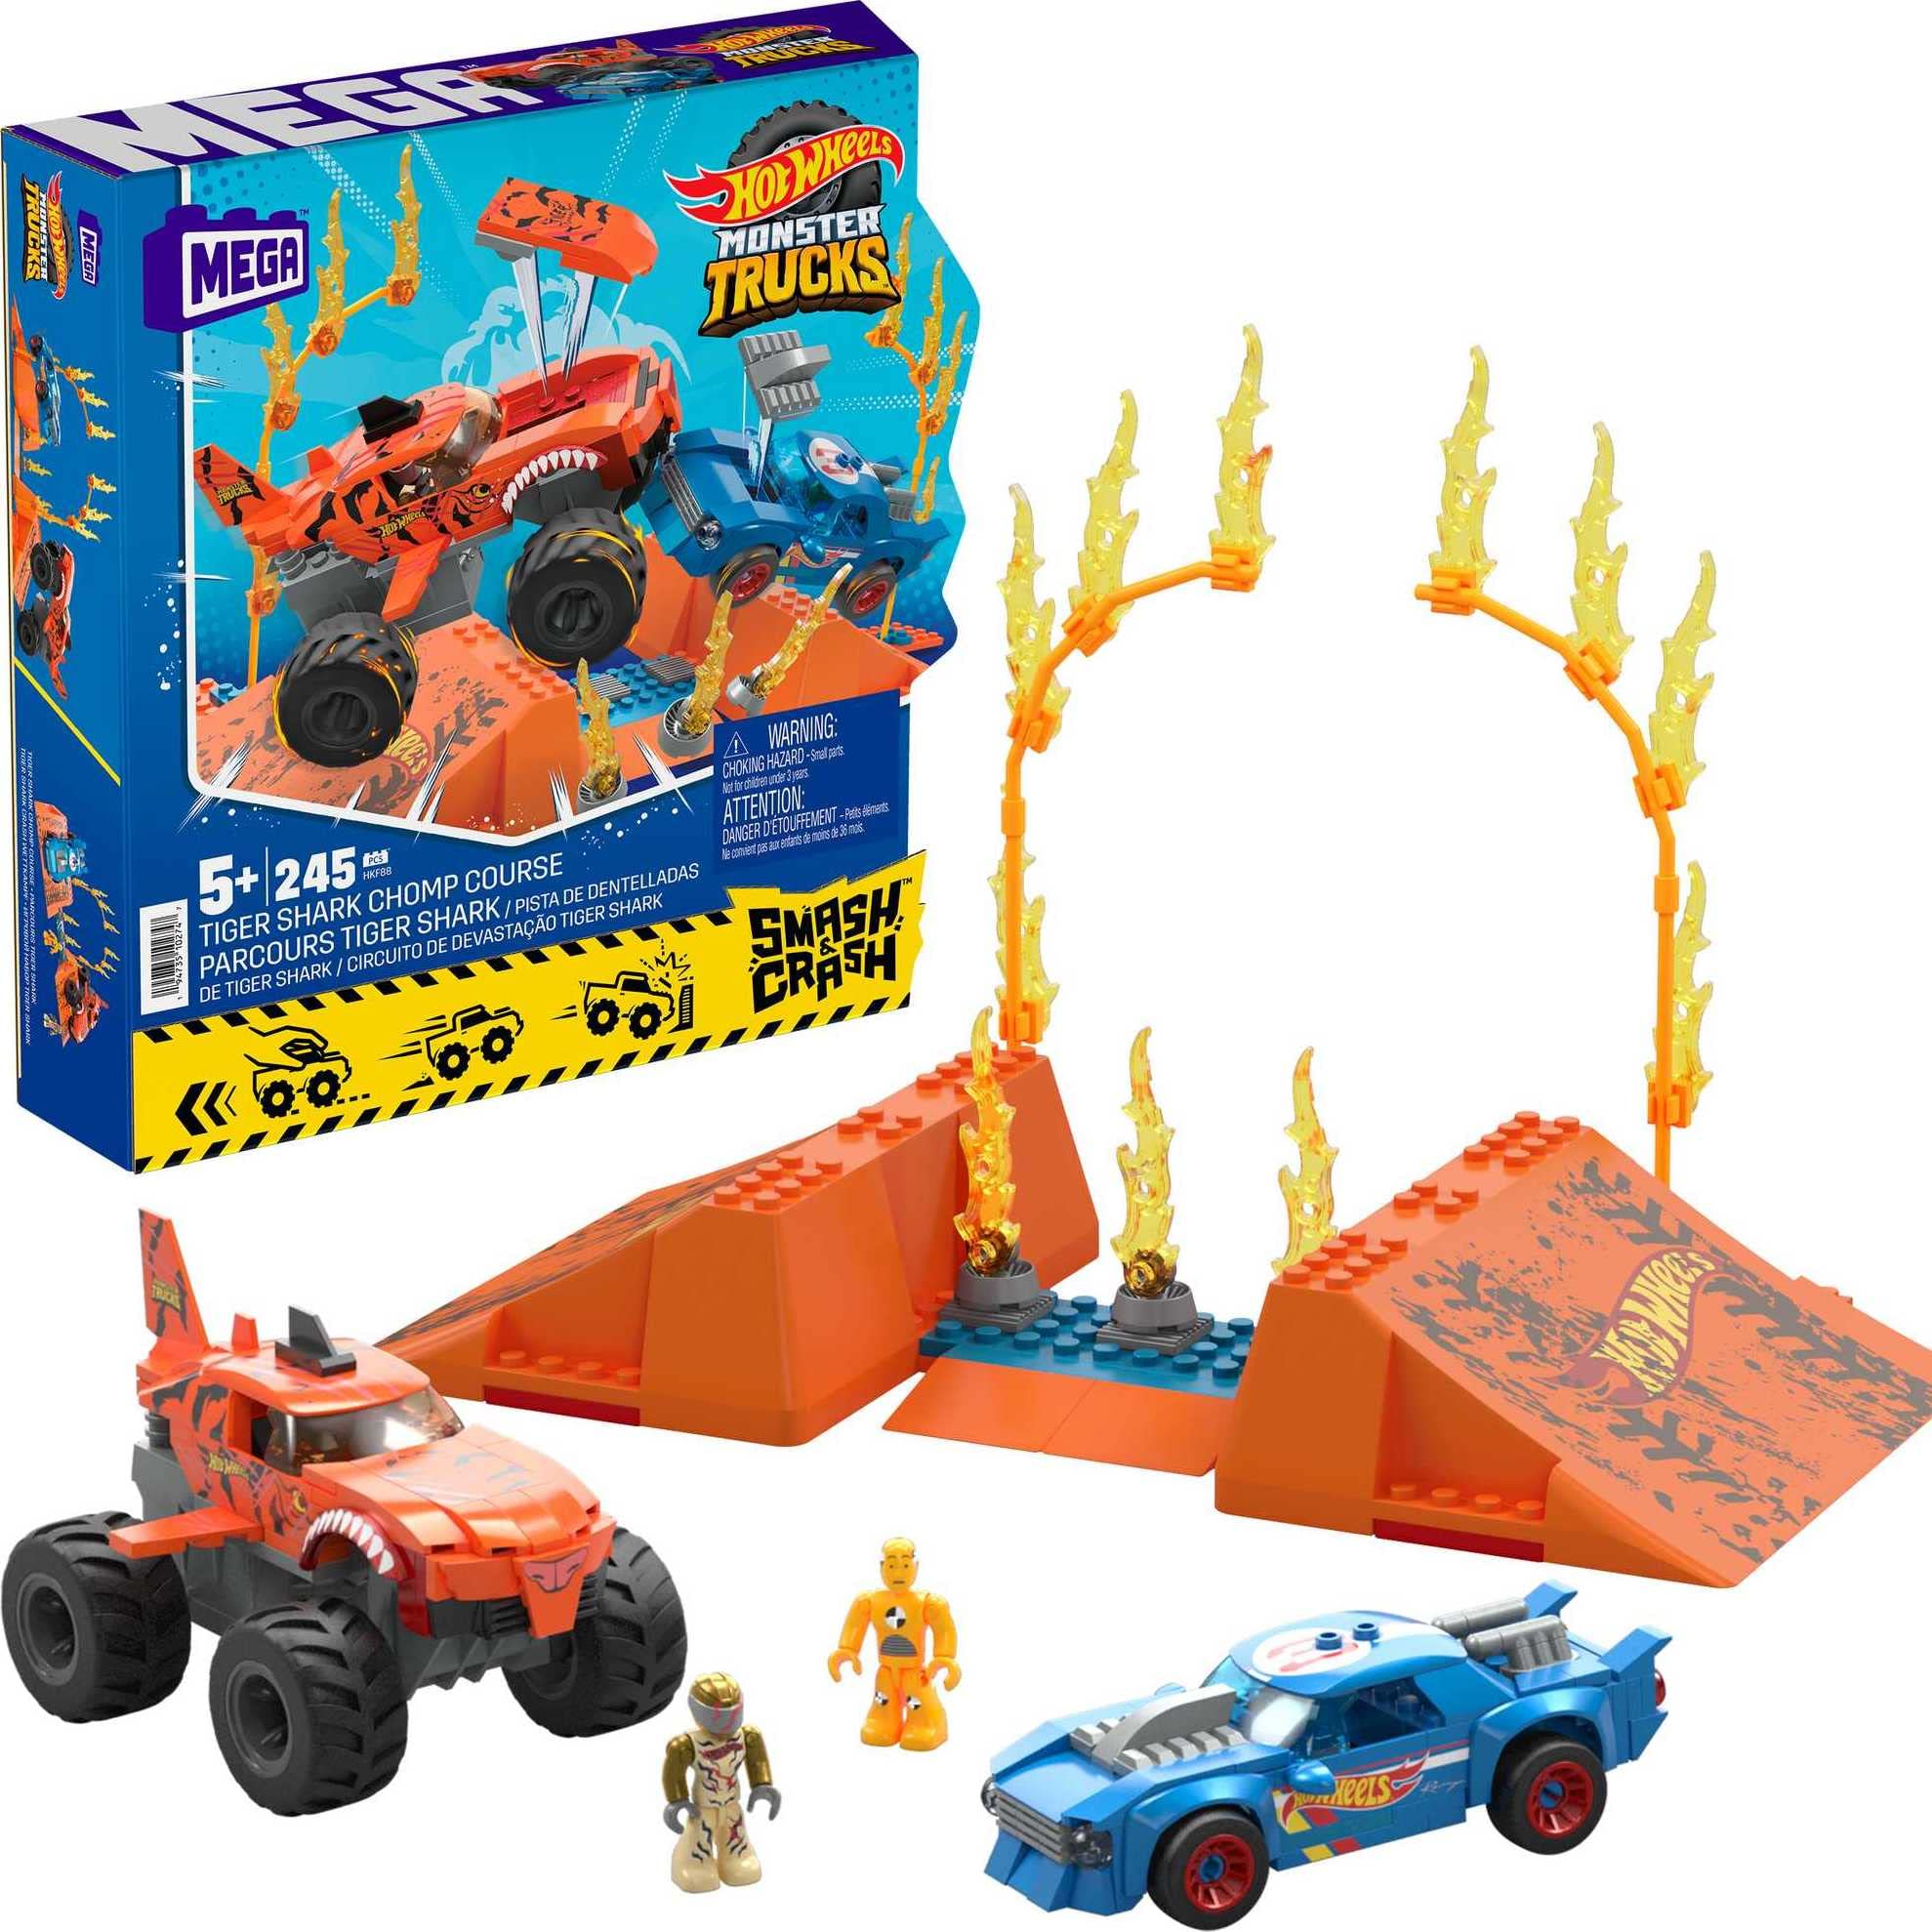 245-Piece MEGA Hot Wheels Monster Trucks Smash & Crash Tiger Shark Chomp Course $12.50 + Free Shipping w/ Prime or on $35+